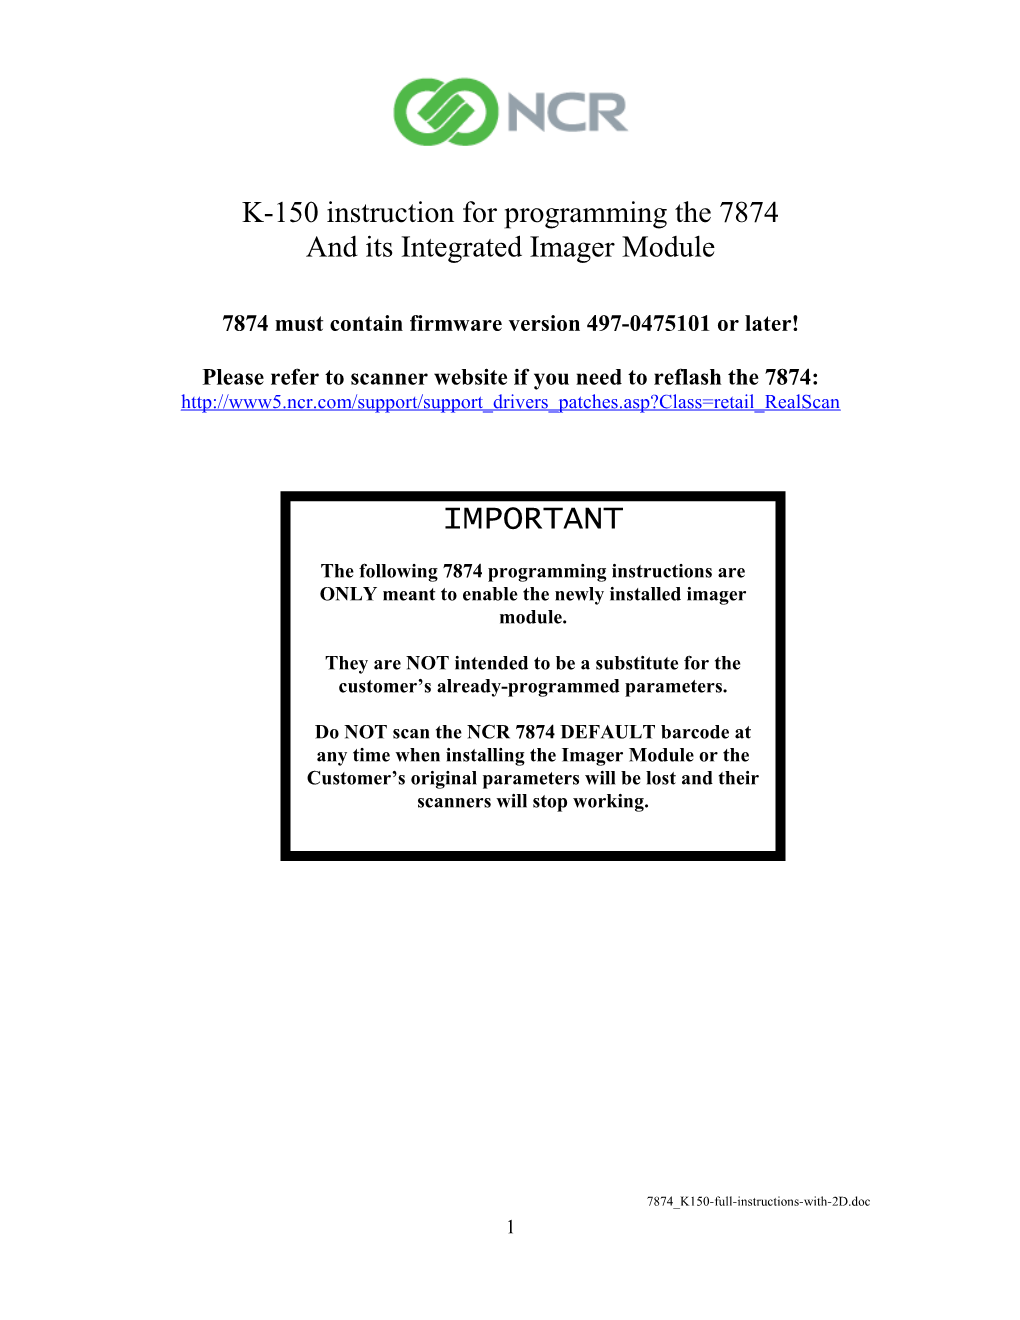 K150 Instruction for Programming the 7878